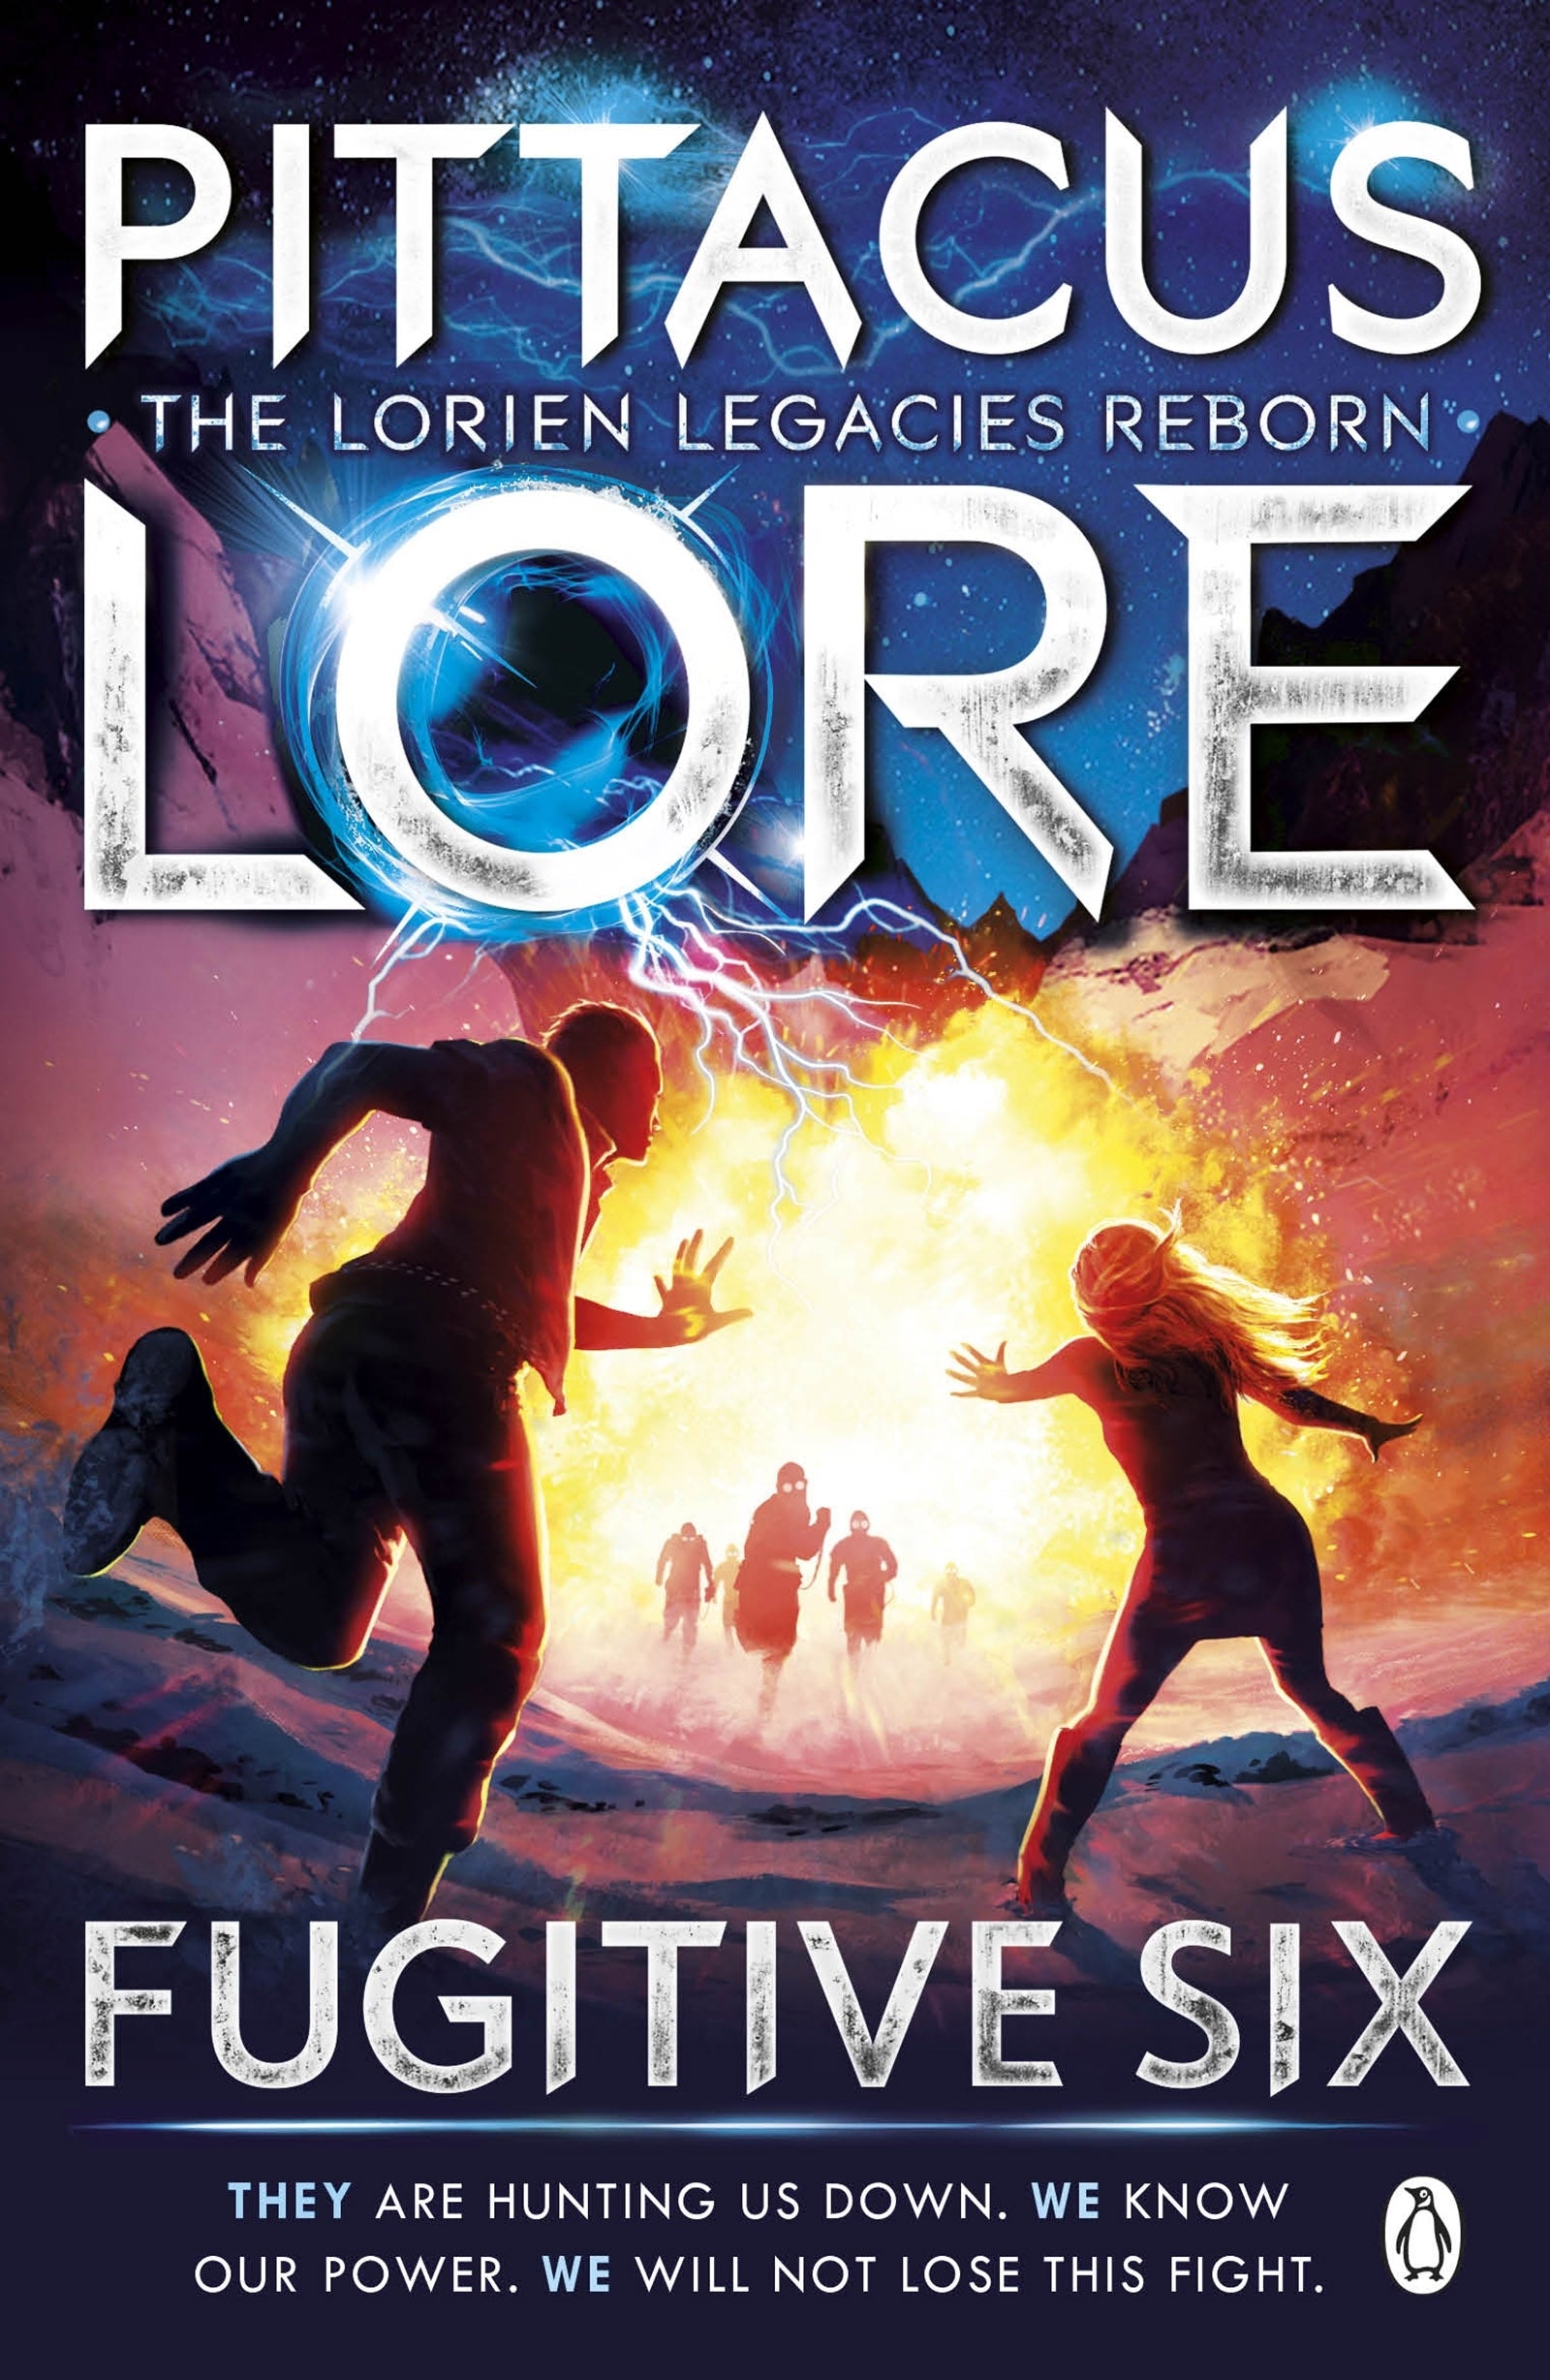 Fugitive Six Lorien Legacies Reborn #2:  By Pittacus Lore